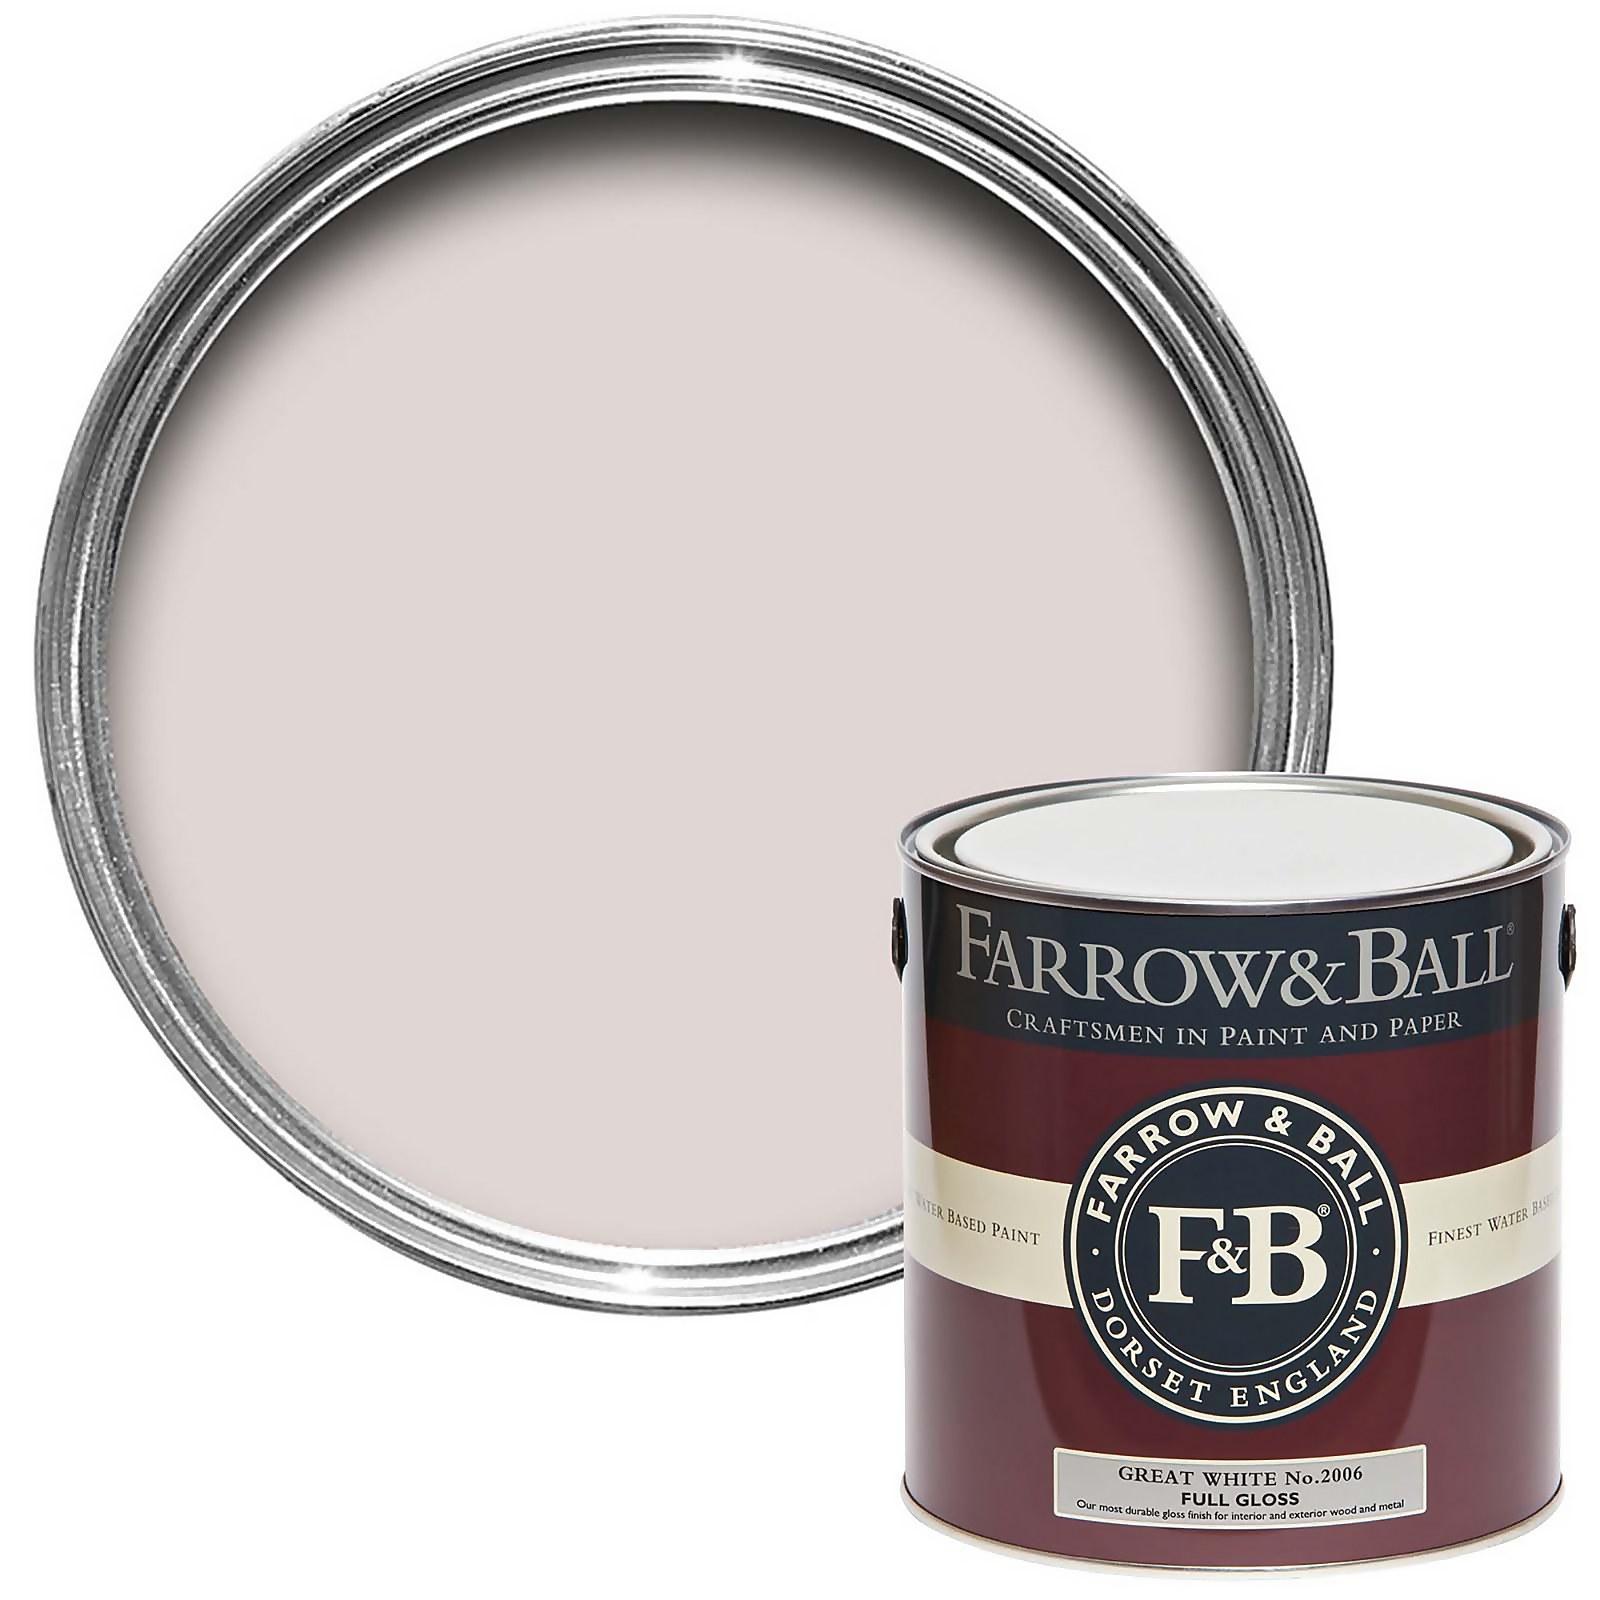 Farrow & Ball Full Gloss Paint Great White No.2006 -2.5L